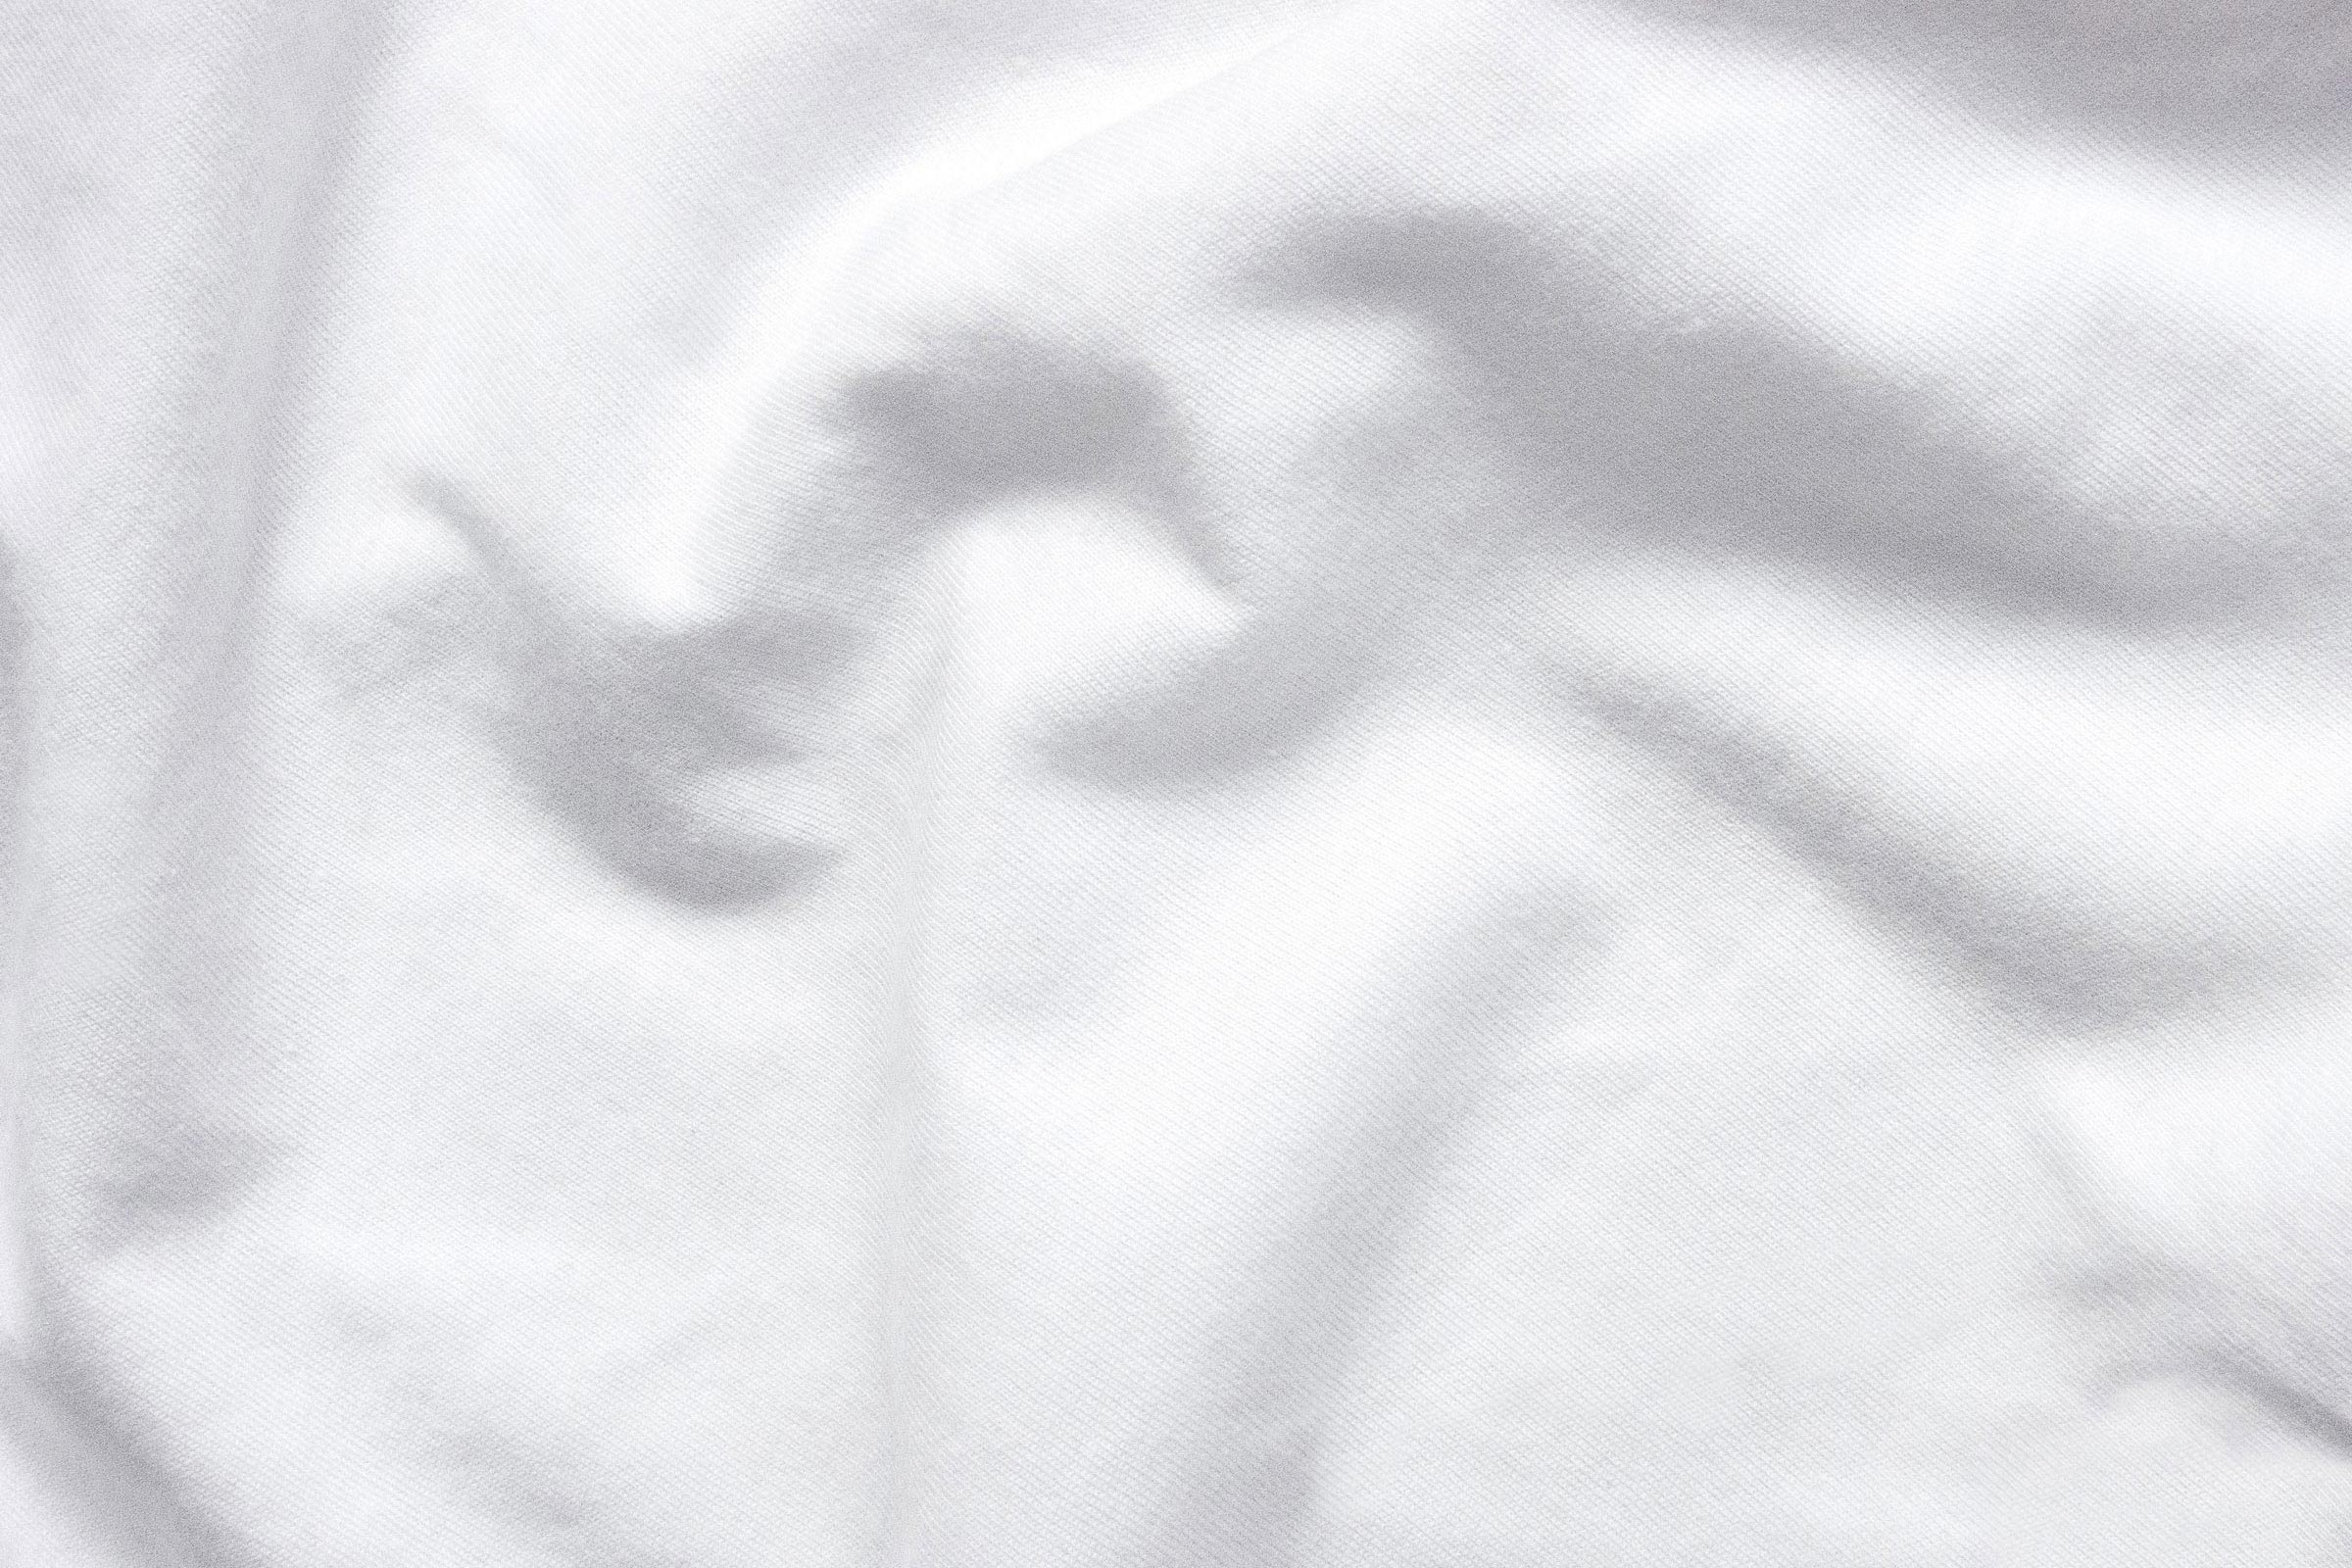 jersey-white-pillowcase-pair-close-up-shot-by-sojao.jpg